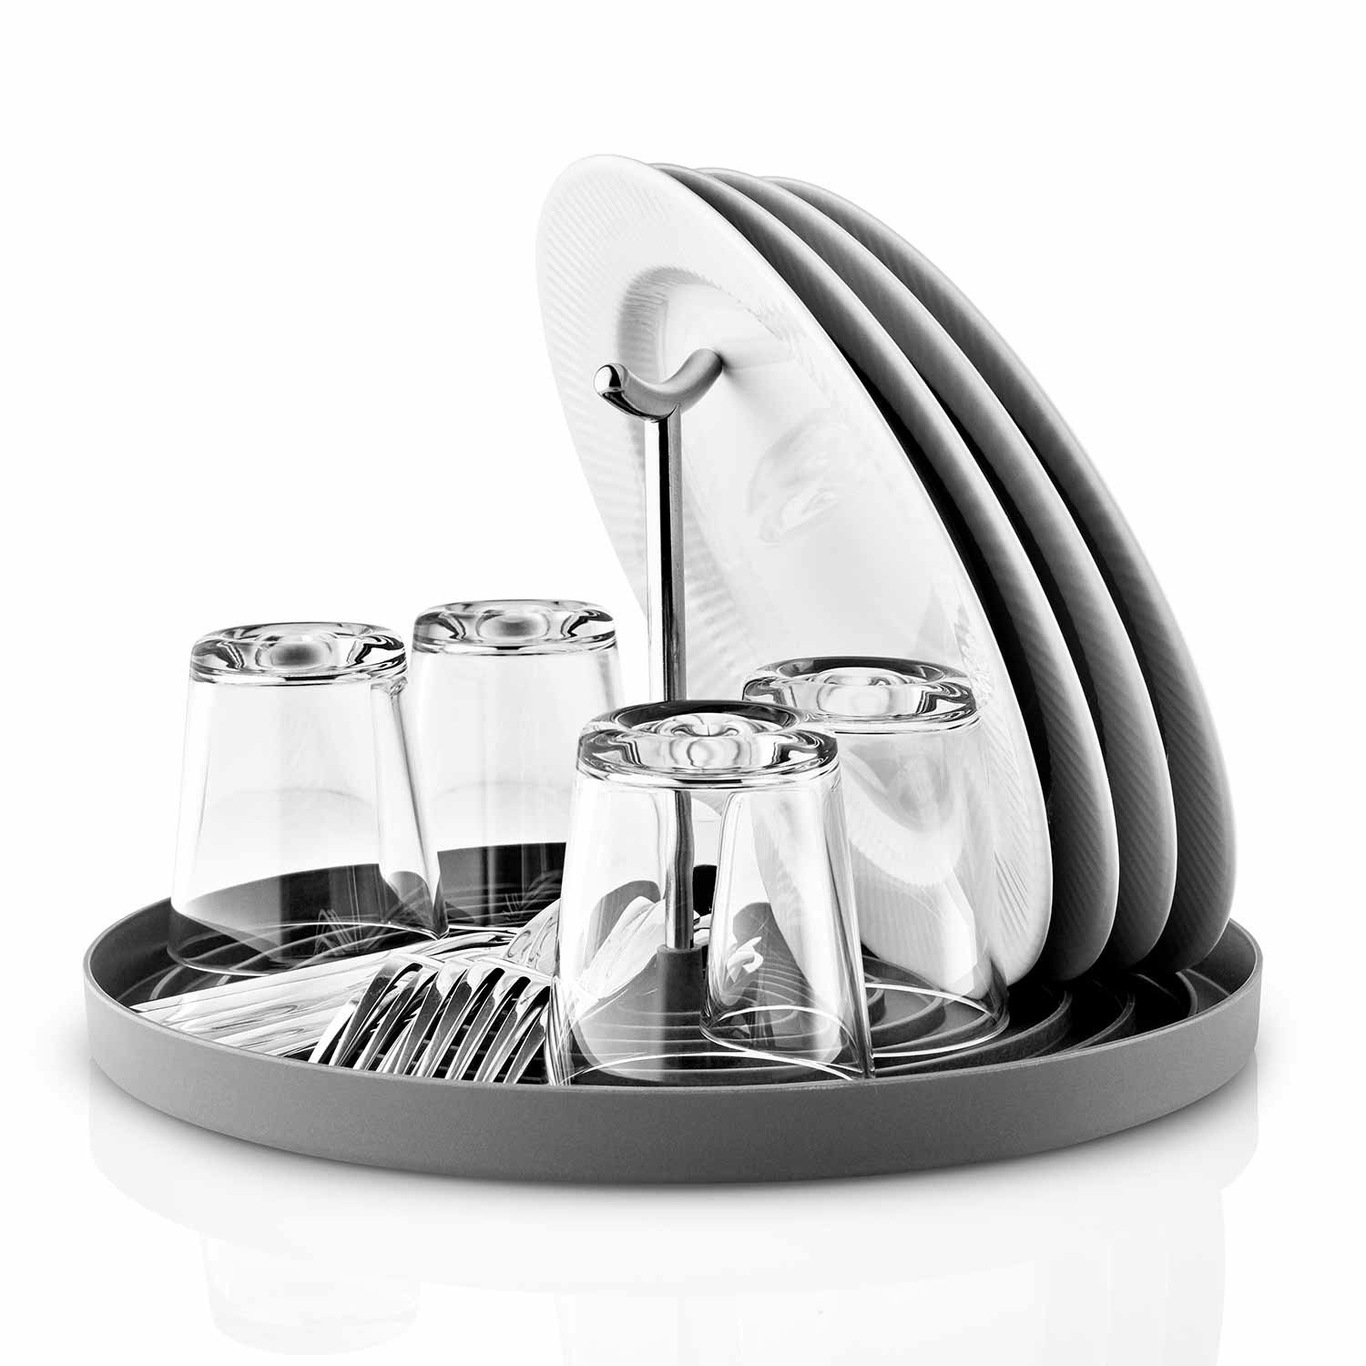 https://royaldesign.com/image/2/eva-solo-foldable-dish-drainer-31-cm-1?w=800&quality=80